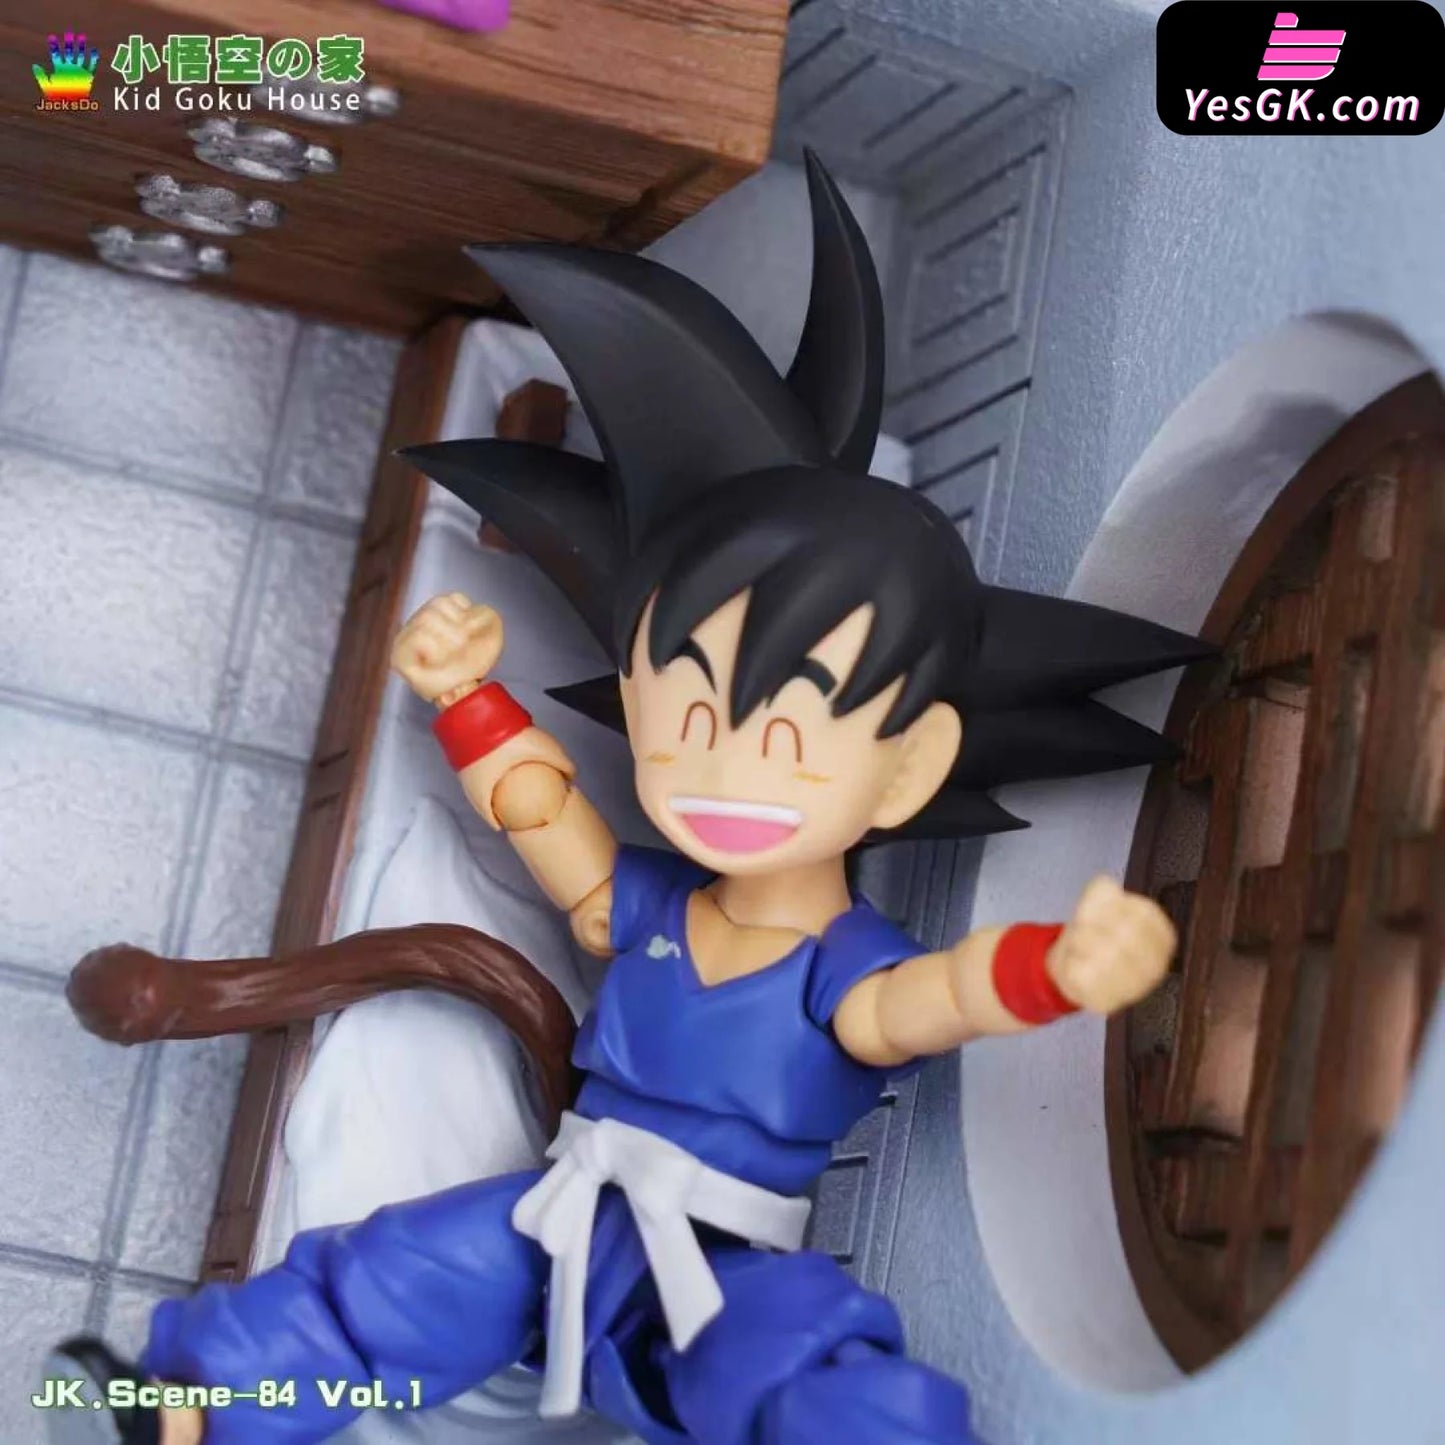 Dragon Ball House Series #1 Goku Resin Statue - Jacksdo Studio [Pre-Order]